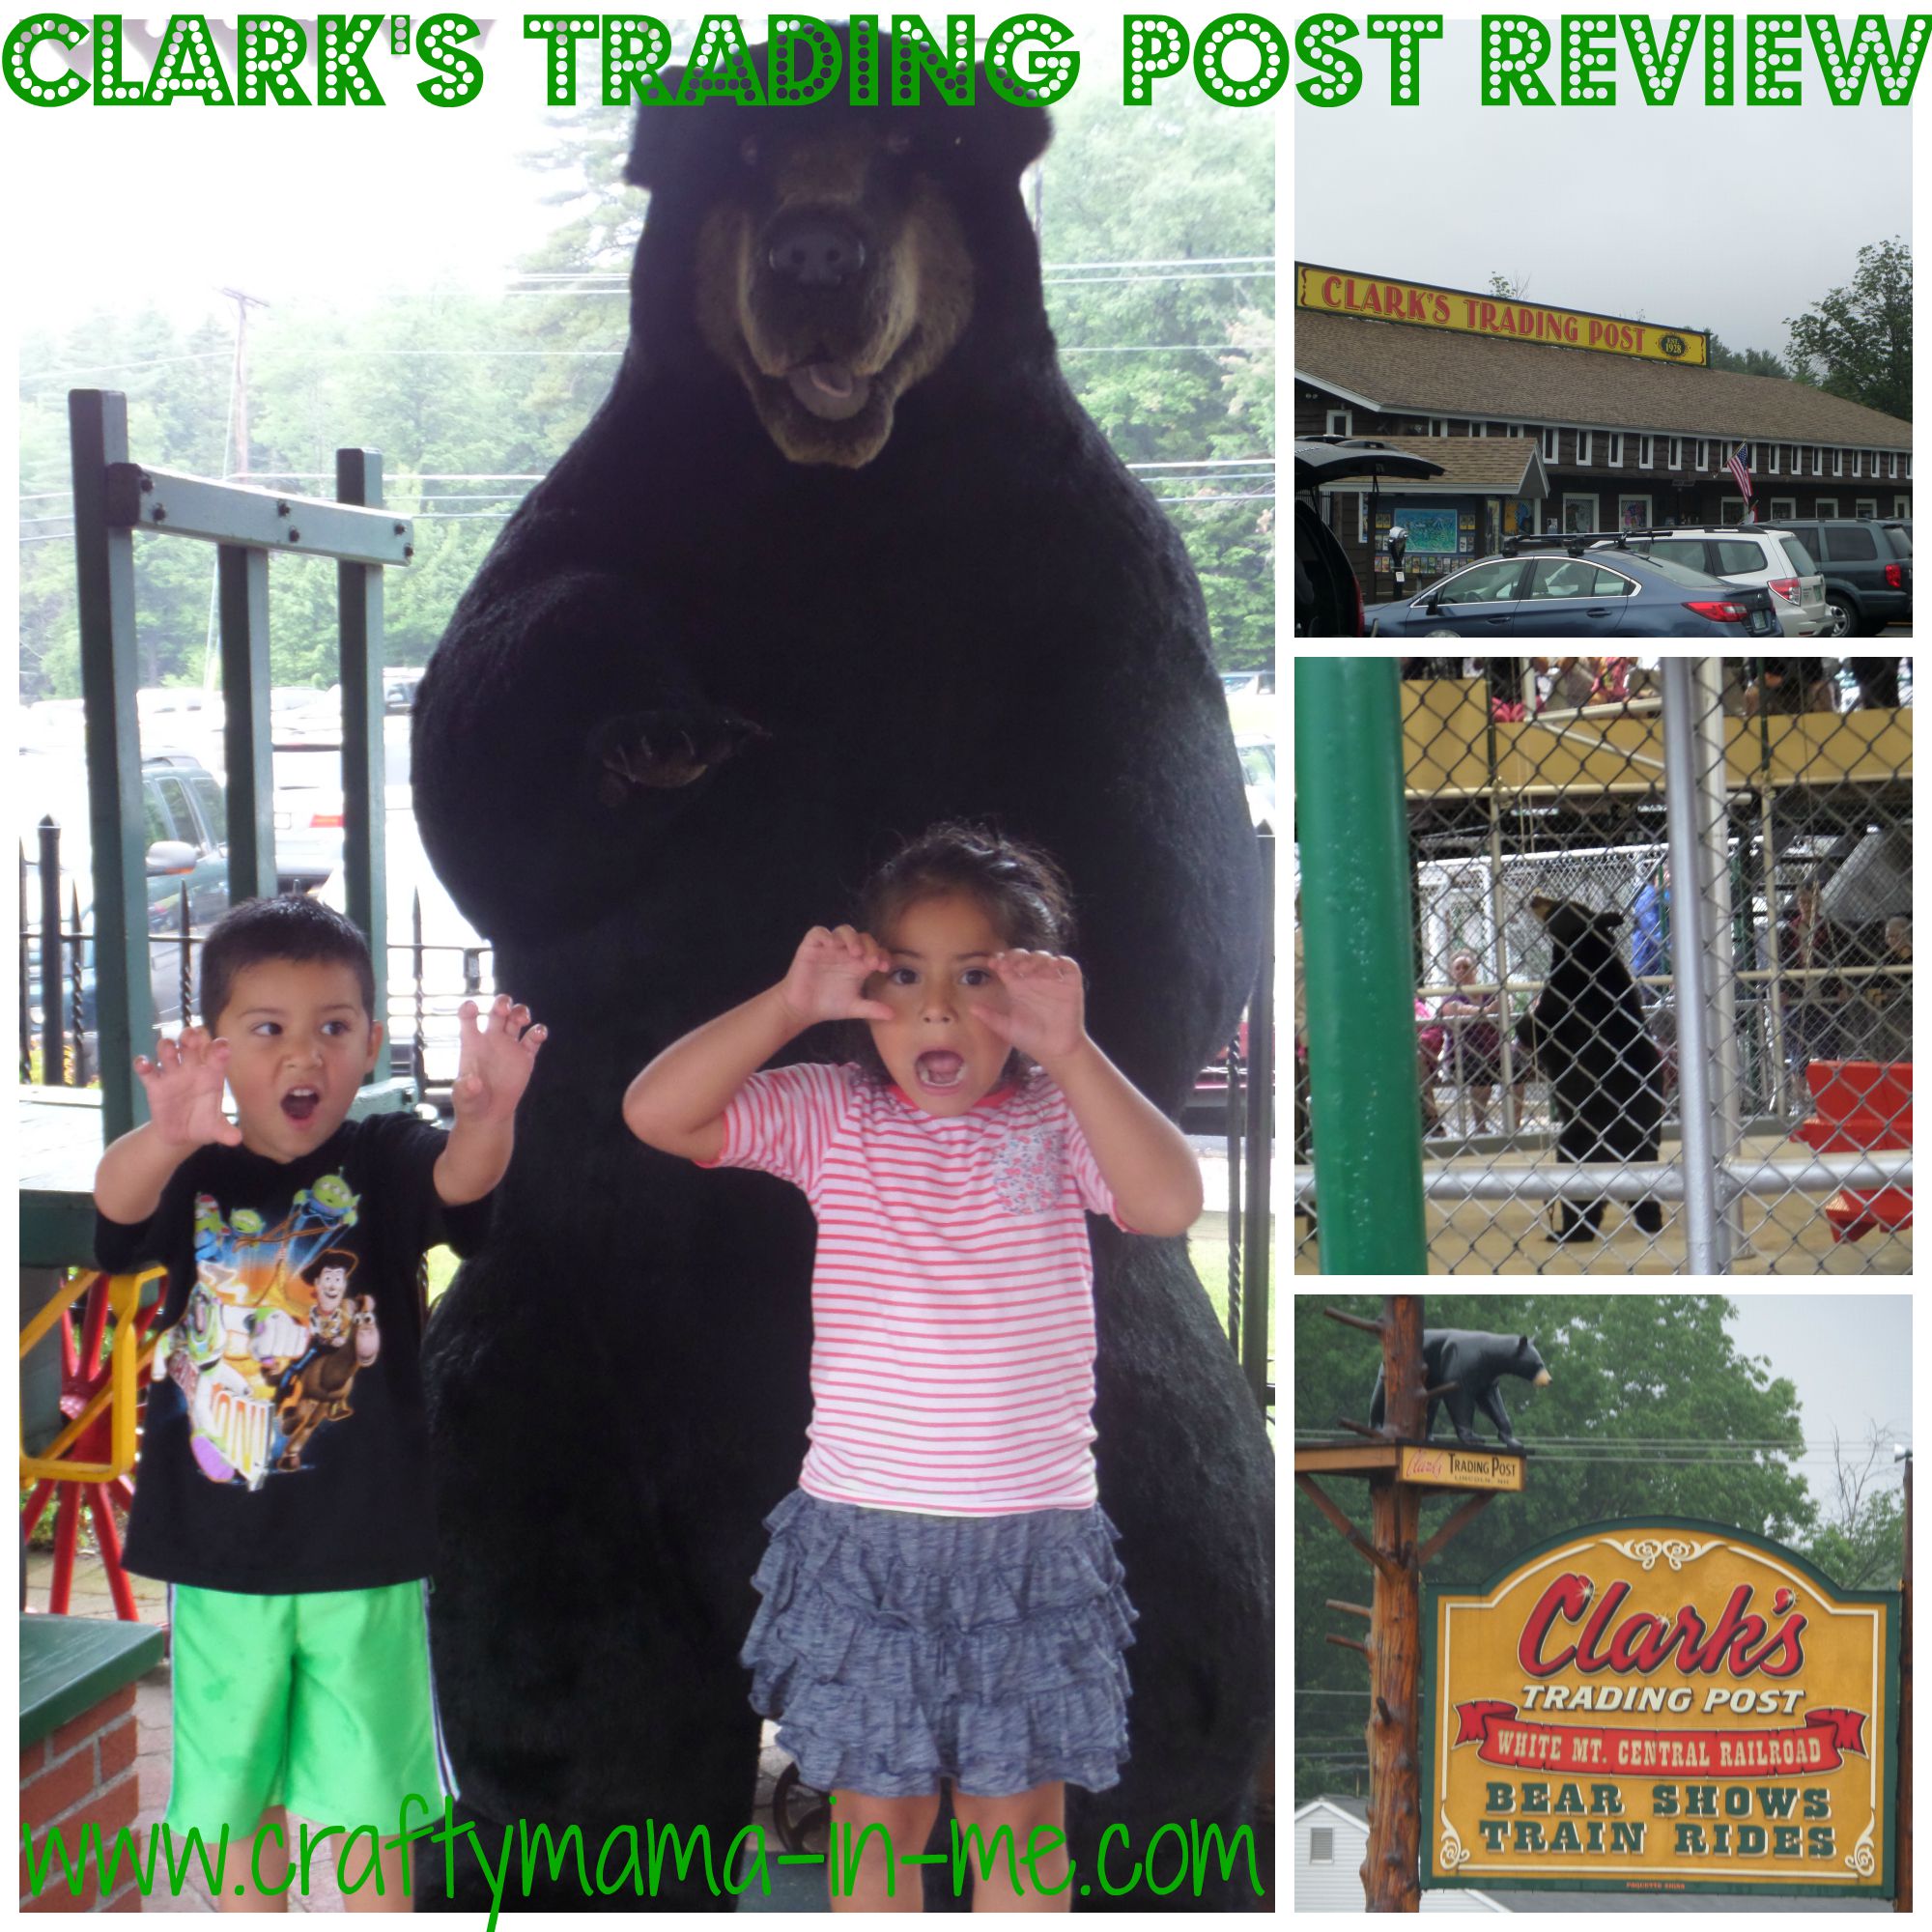 clarks bears trading post